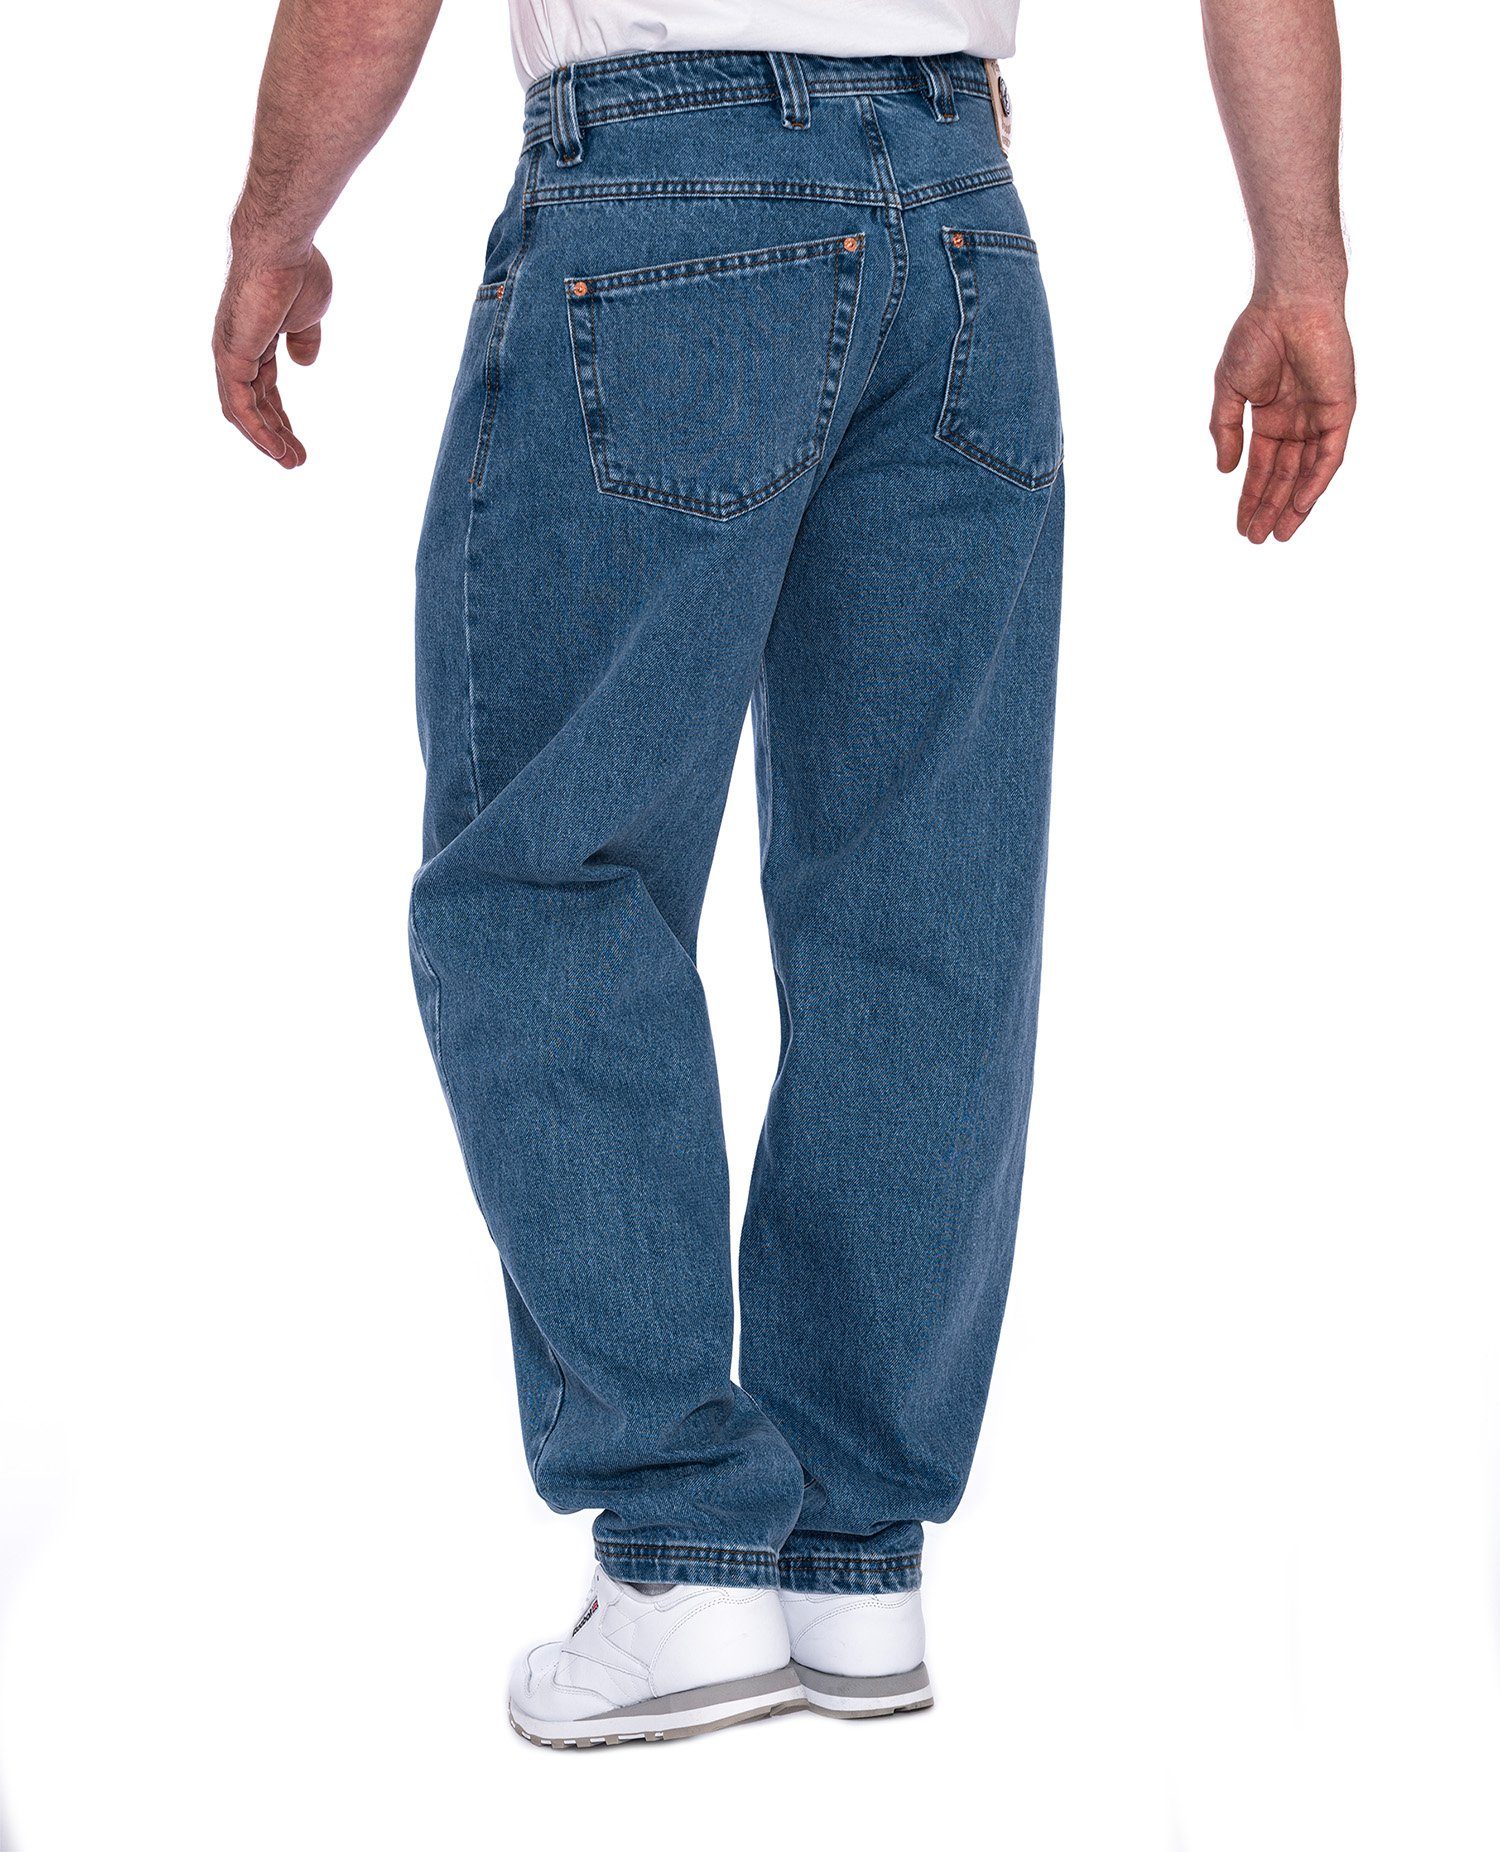 PICALDI Jeans Weite Jeans Fit, Zicco Five Jeans Detroit Loose 471 Pocket